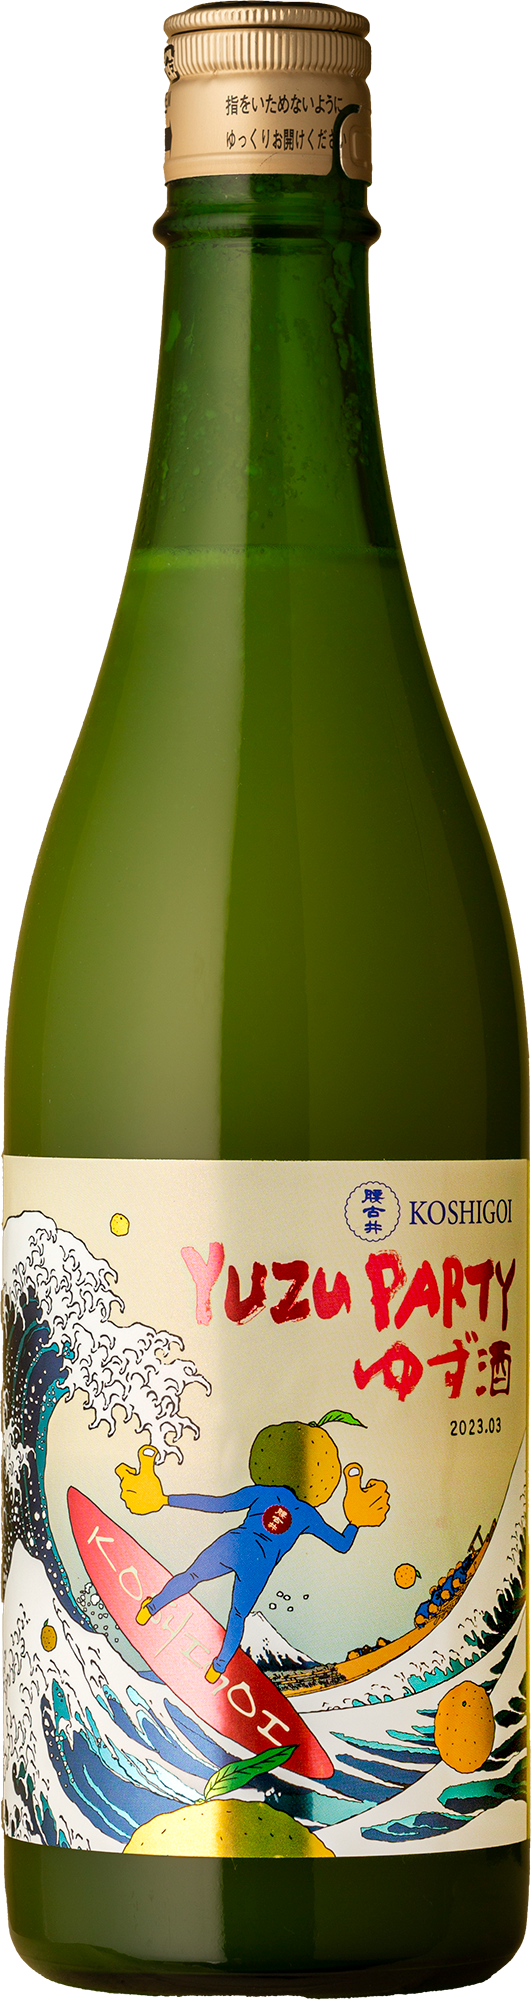 Koshigoi - Yuzu Party Yuzushu 720mL Not Wine